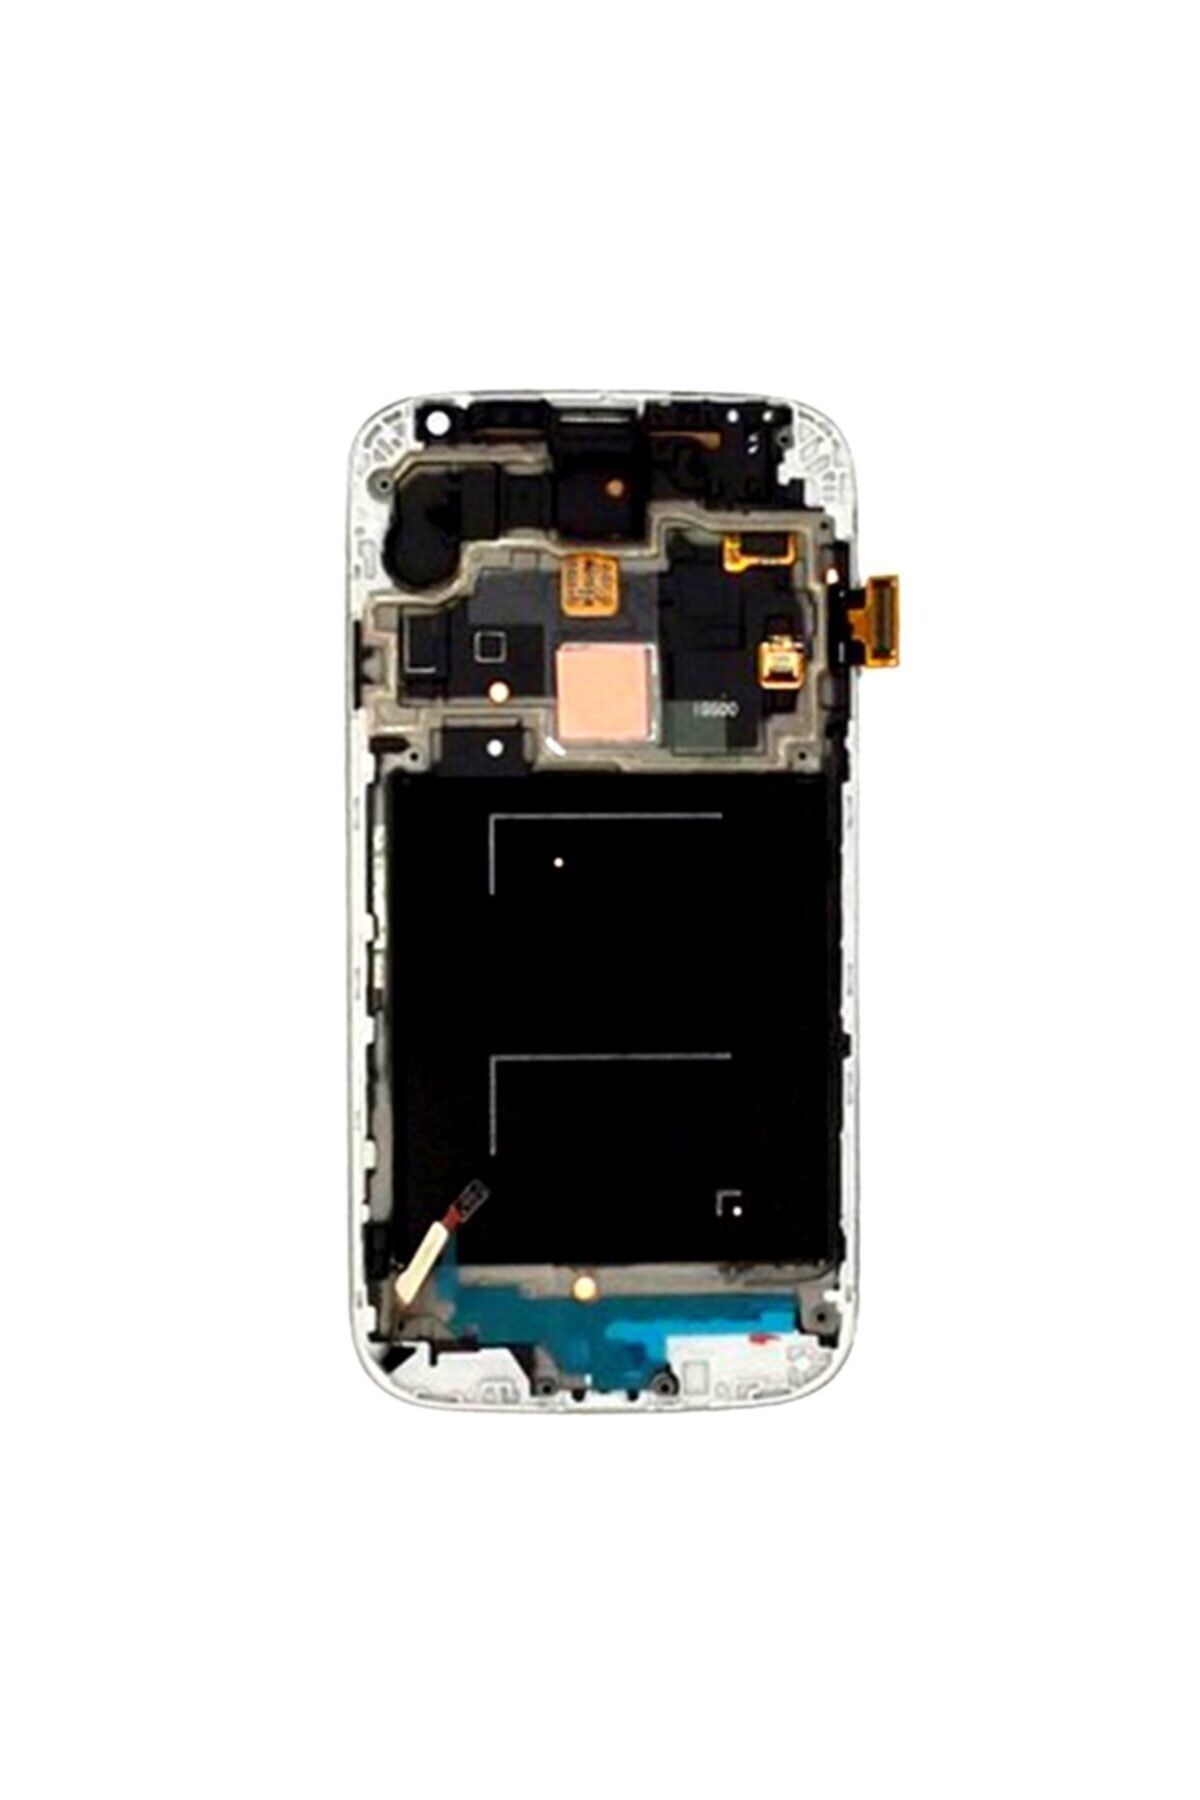 tekyerdenal Samsung Galaxy S4 I9505 Uyumlu  Lcd Ekran Dokunmatik Beyaz Revizyonlu